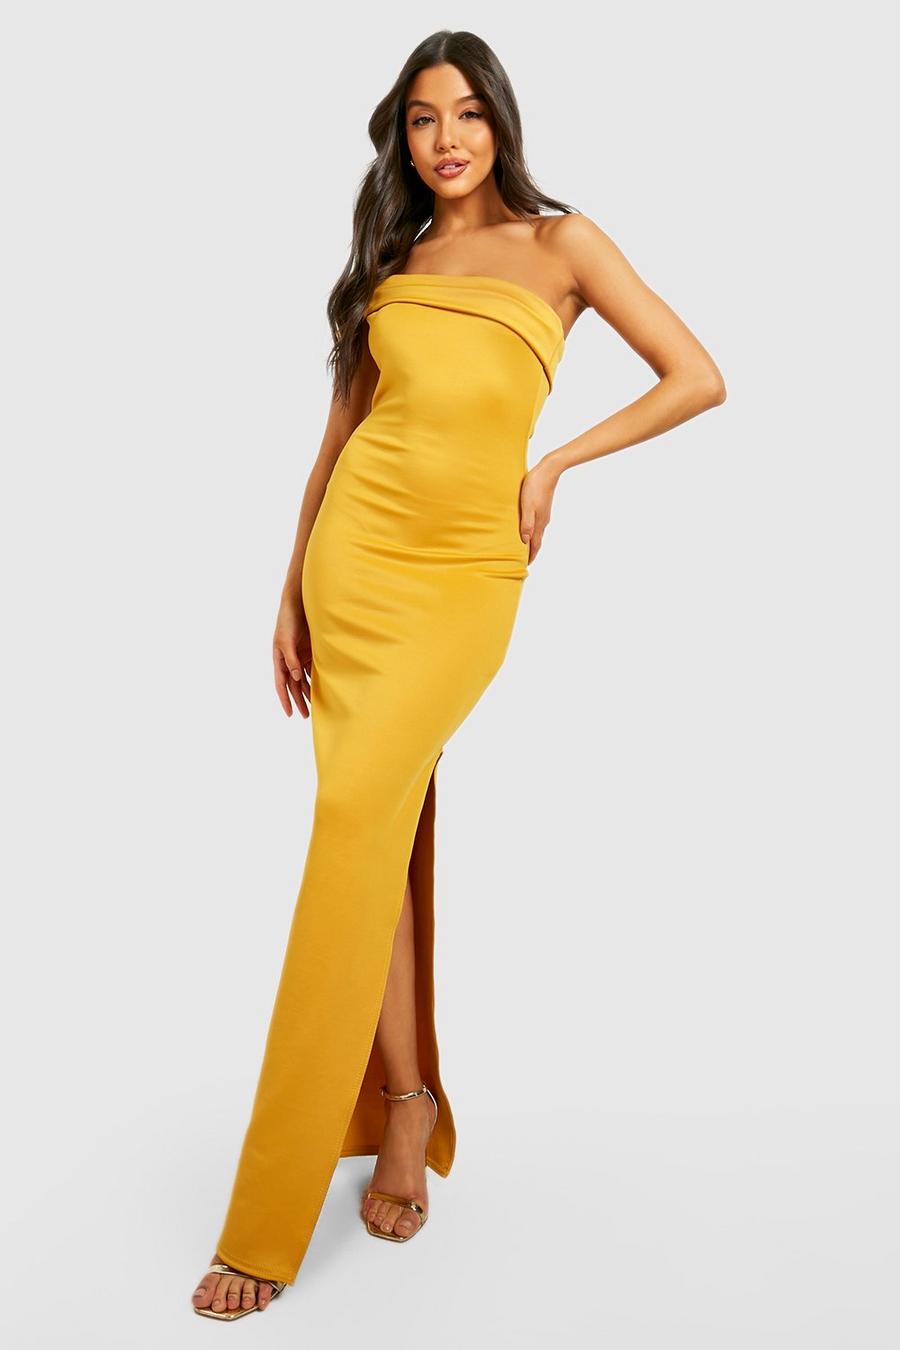 Mustard yellow One Shoulder Slim Fit Maxi Dress